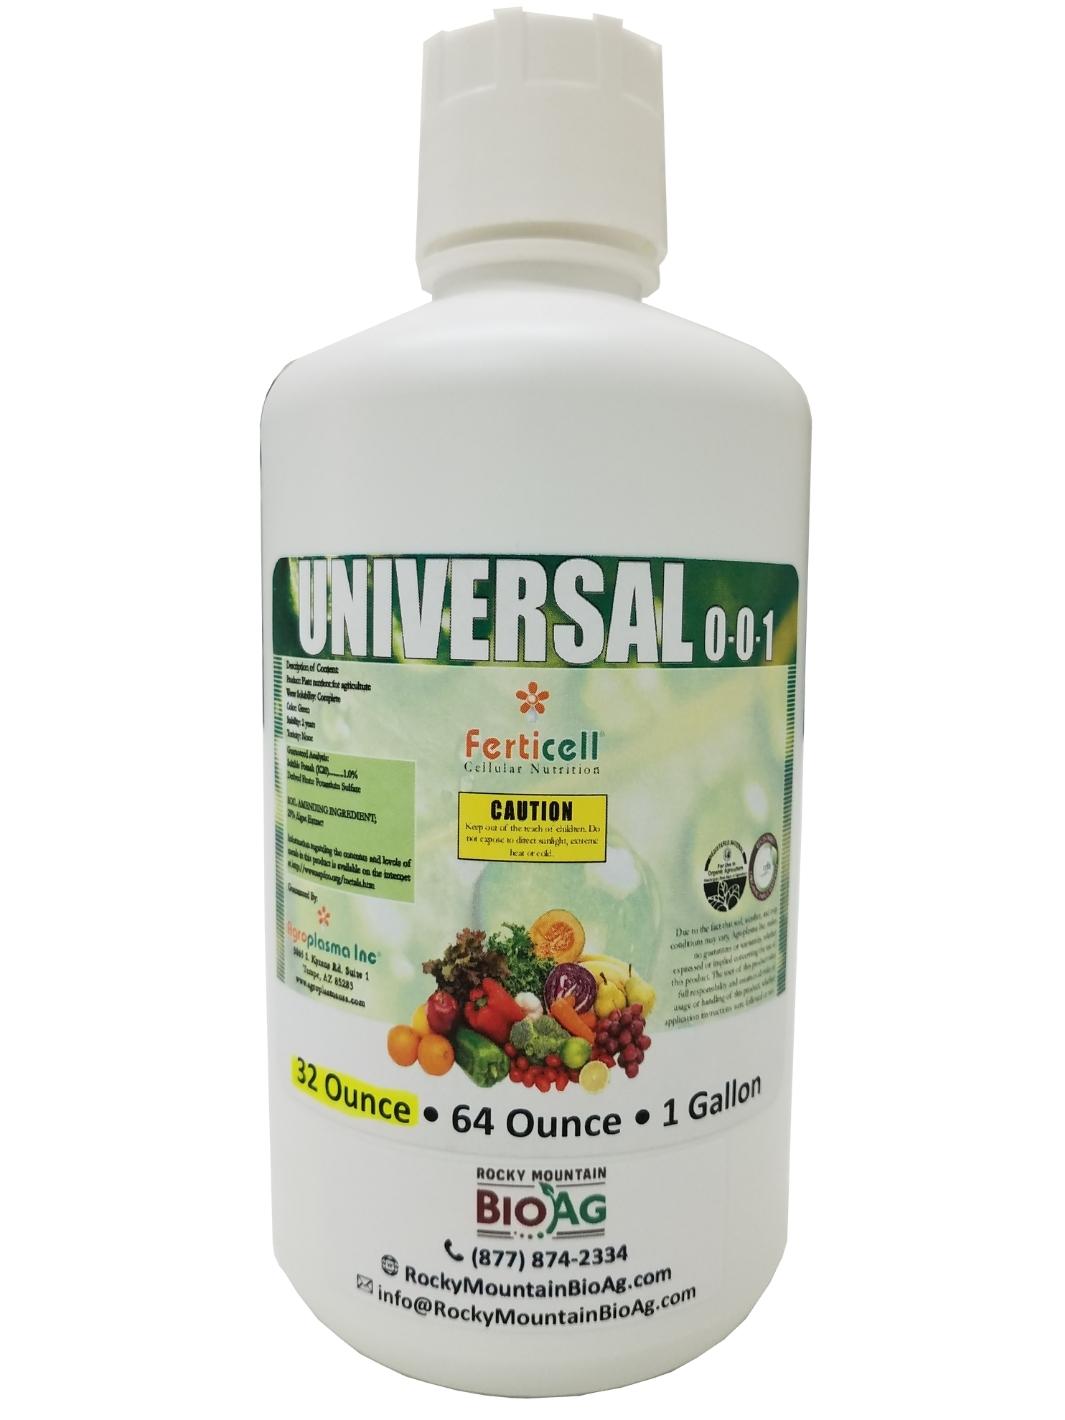 Ferticell Universal 0-0-1 Freshwater Algae Extract Organic Fertilizer